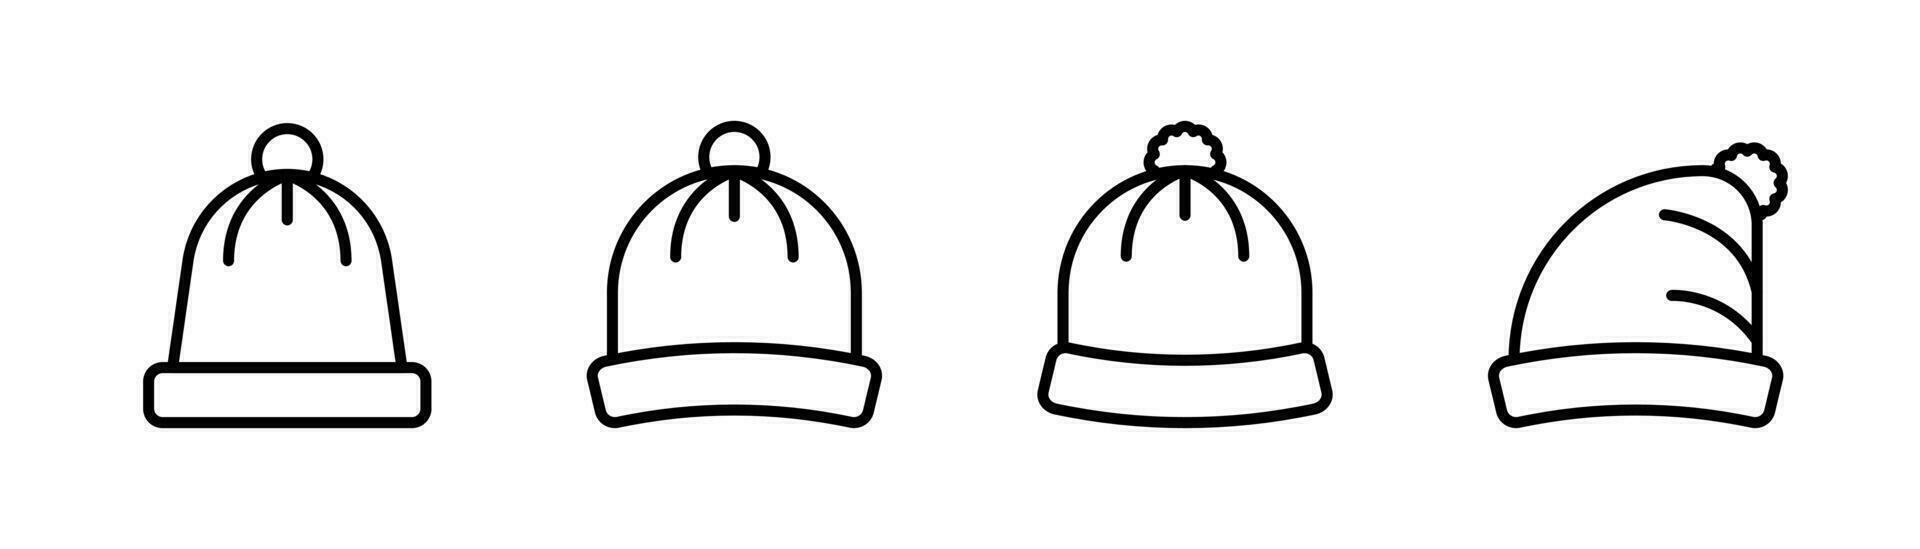 Winter hat line icon. Winter cap symbol. Christmas hat line icon. Winter hat icon set. Editable stroke. Stock vector illustration.